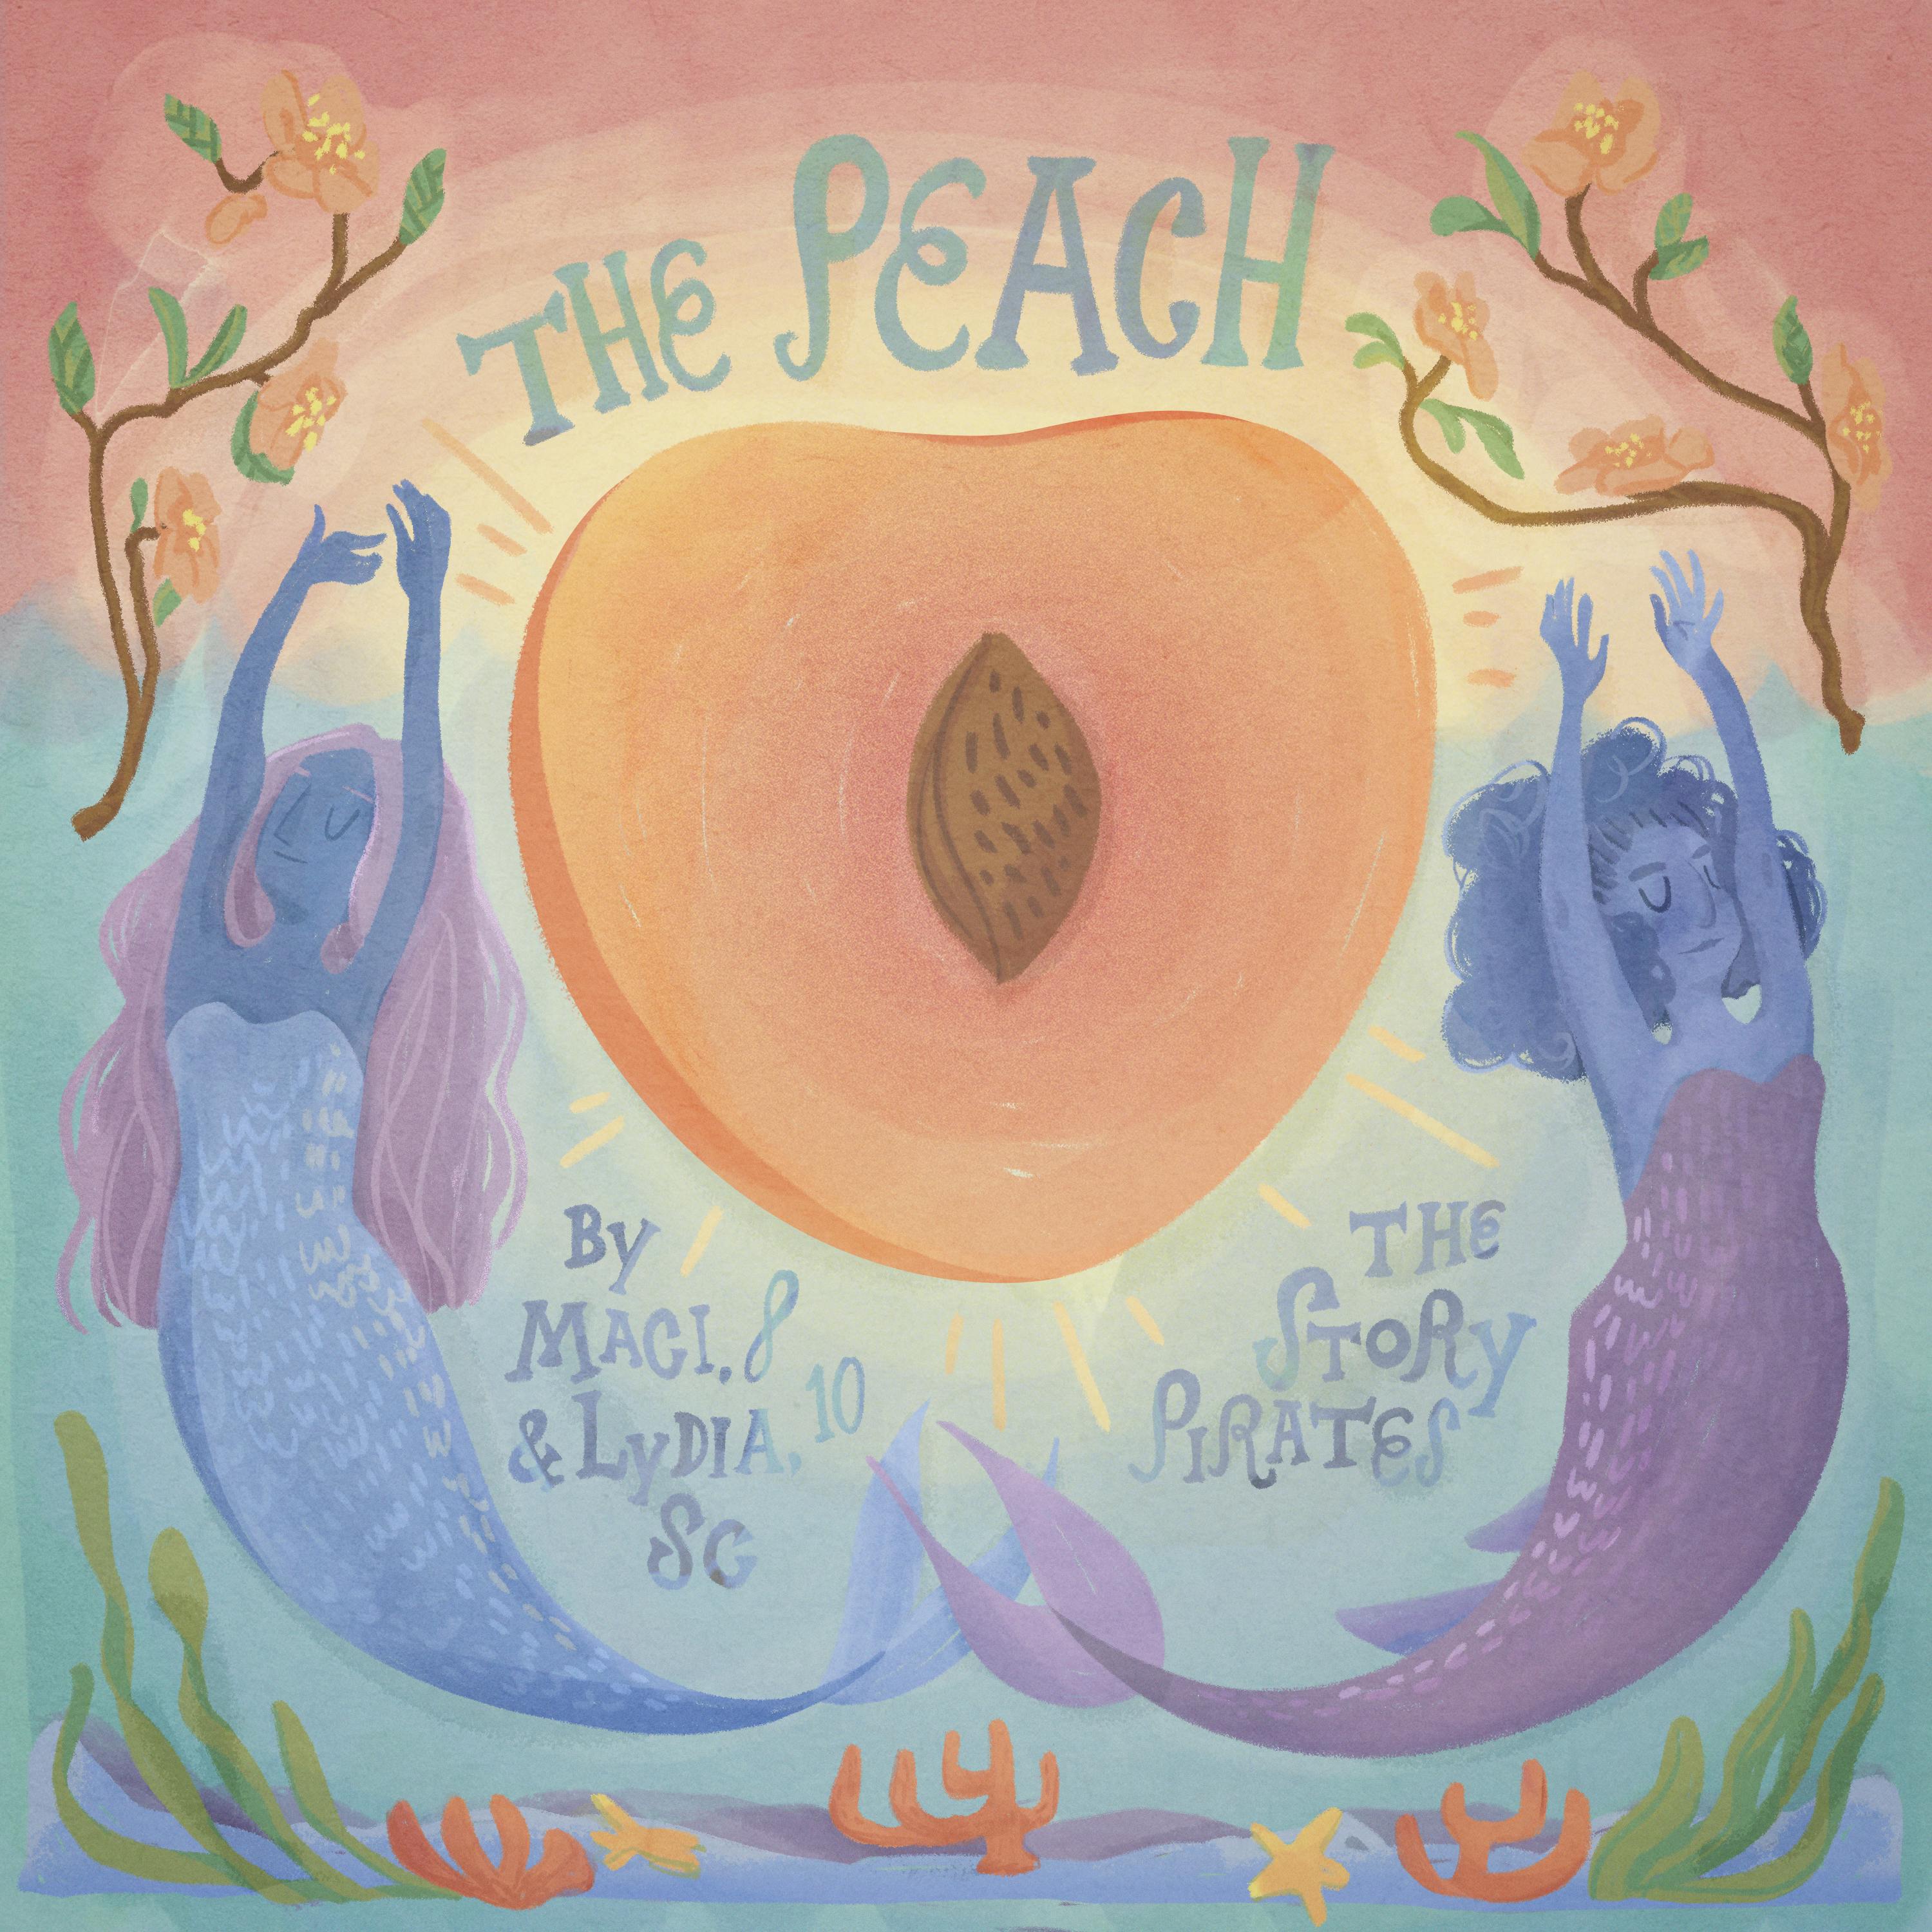 The Peach/Ten Tigers